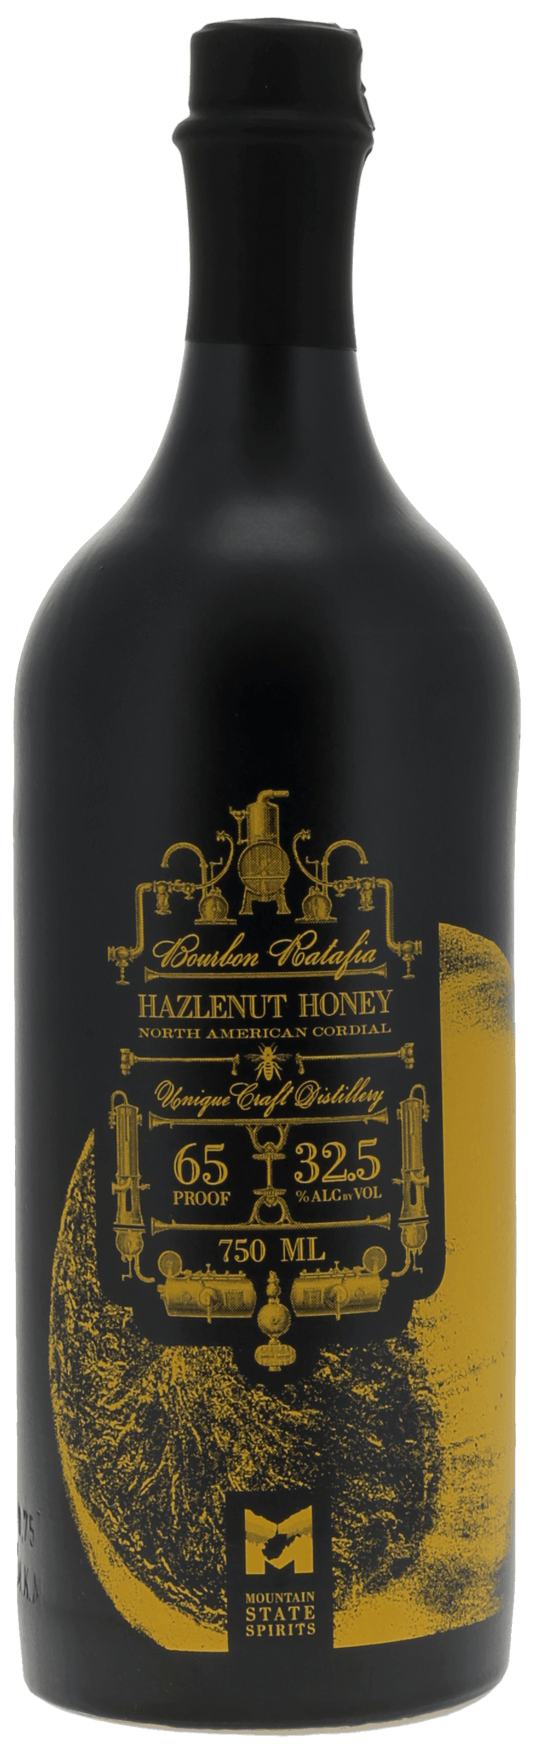 Hazelnut Honey Bourbon Ratafia